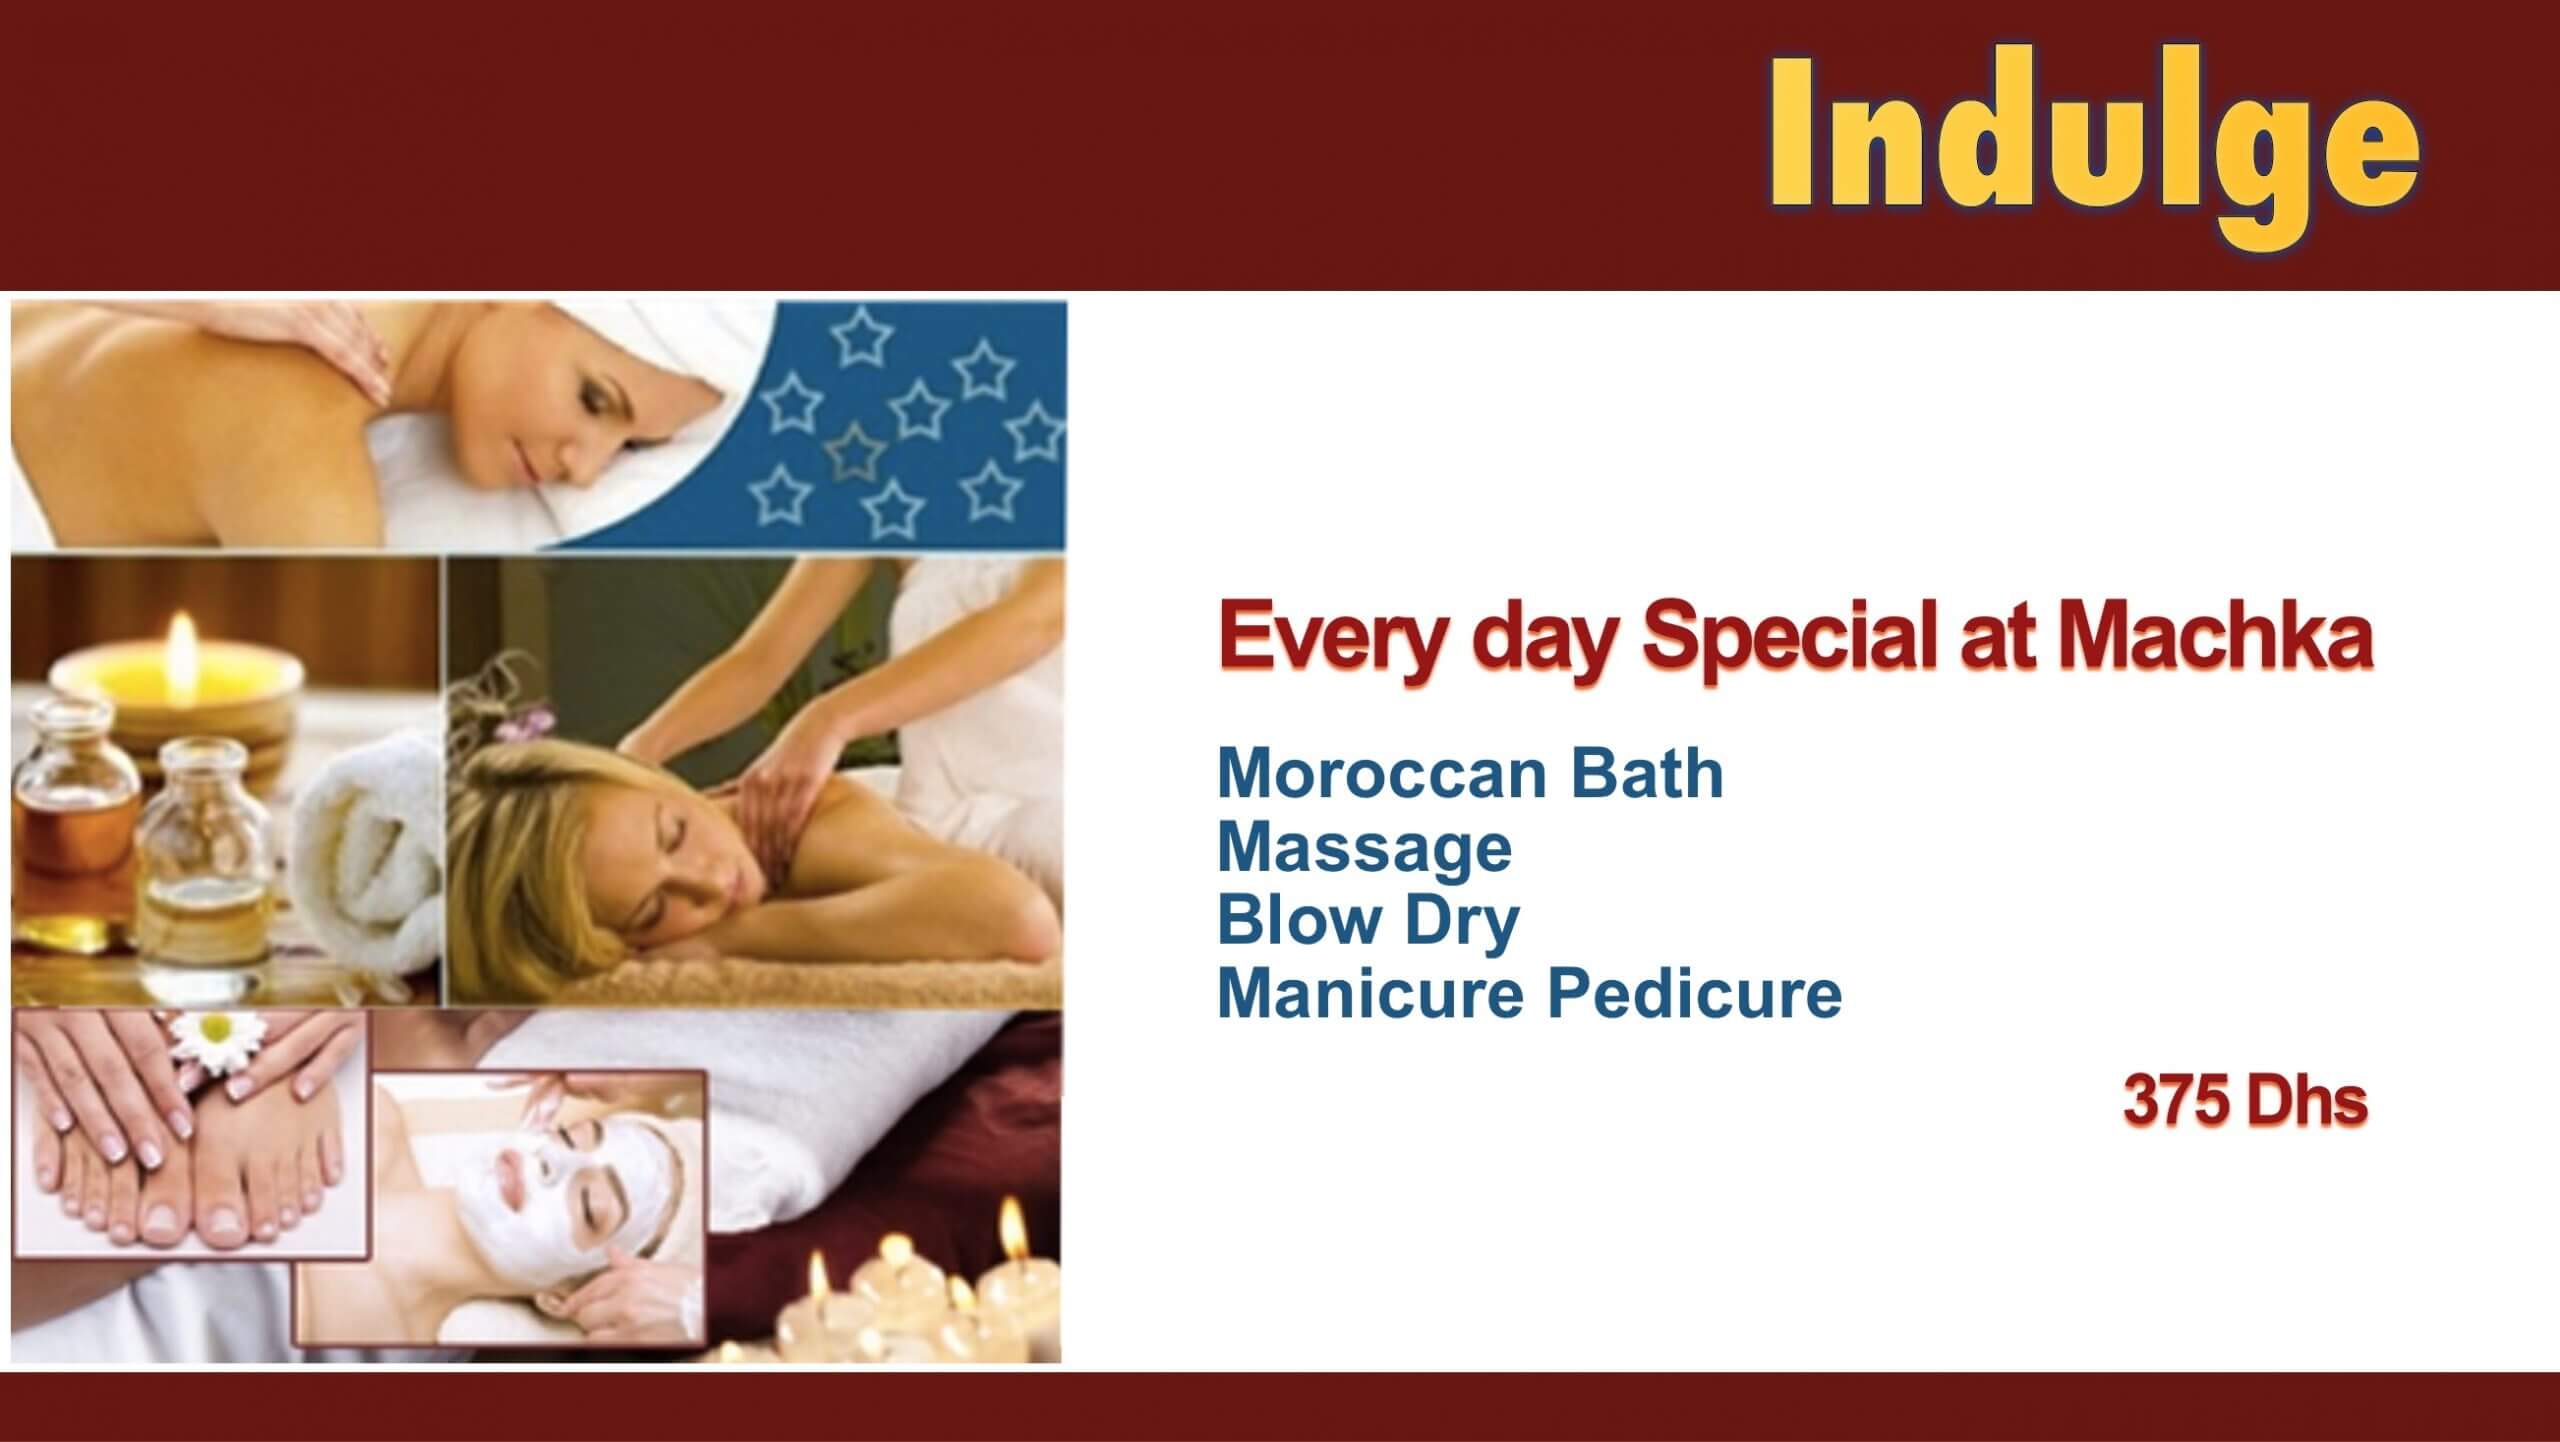 Moroccan bath promotion Dubai